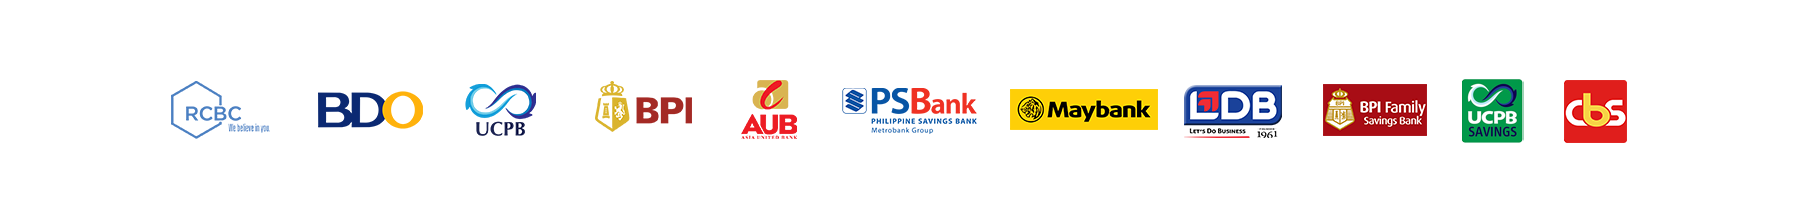 Car Financing - RCBC - BDO - UCPB - BPI - ADB - PSBANK - Maybank - LDB - BPI Family - UCPB Savings - CBS